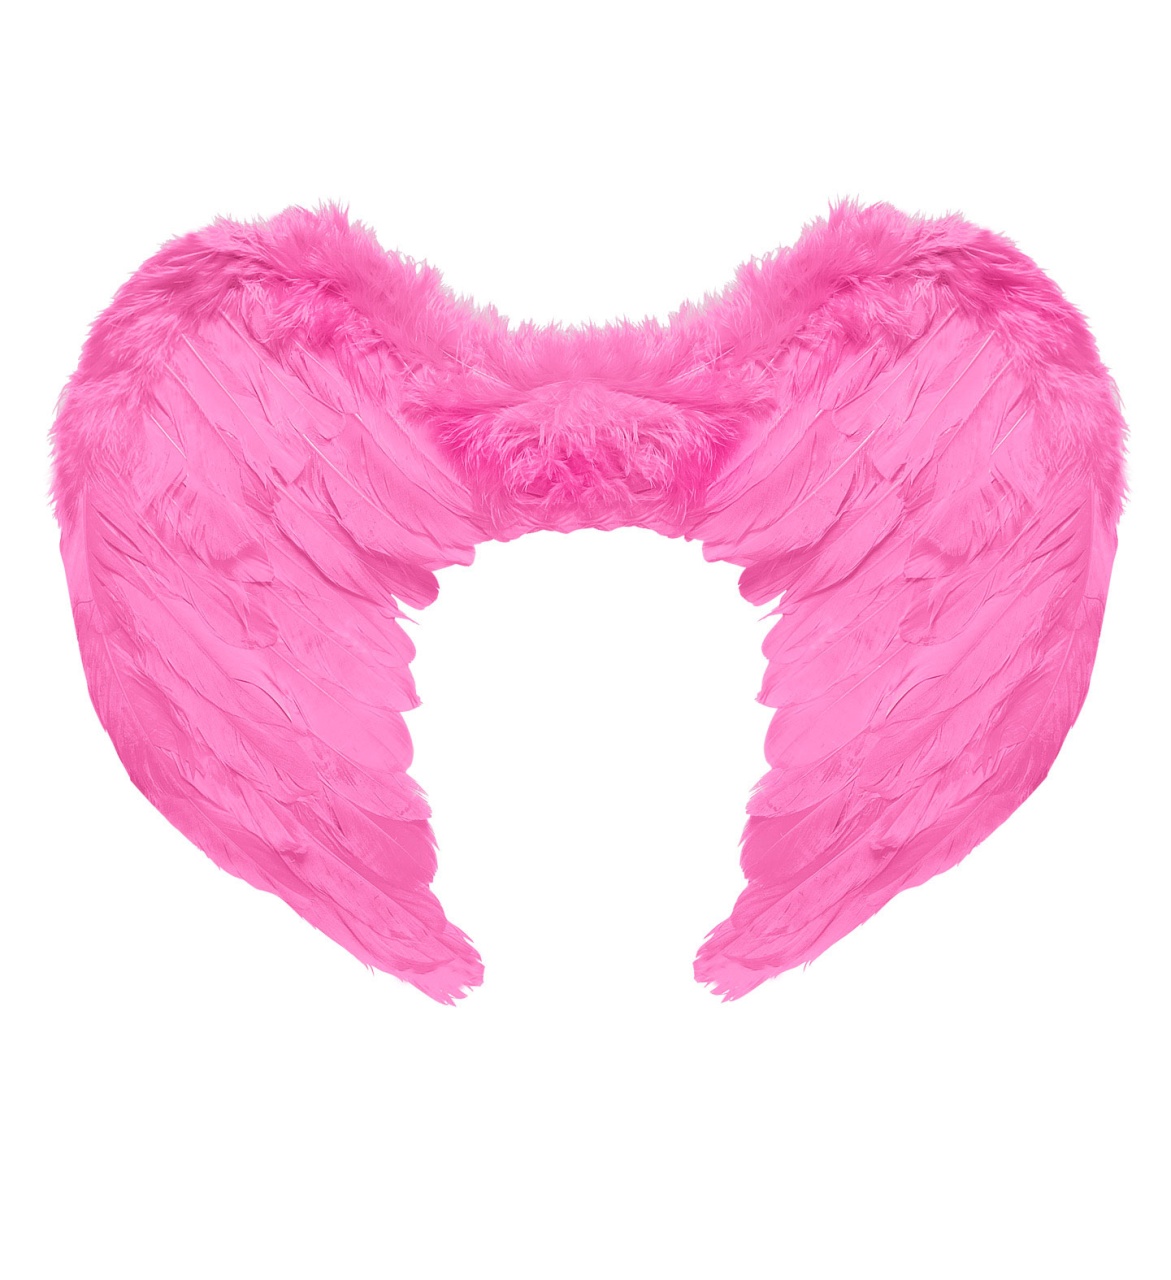 Kostüm Zubehör Flügel aus Federn rosa